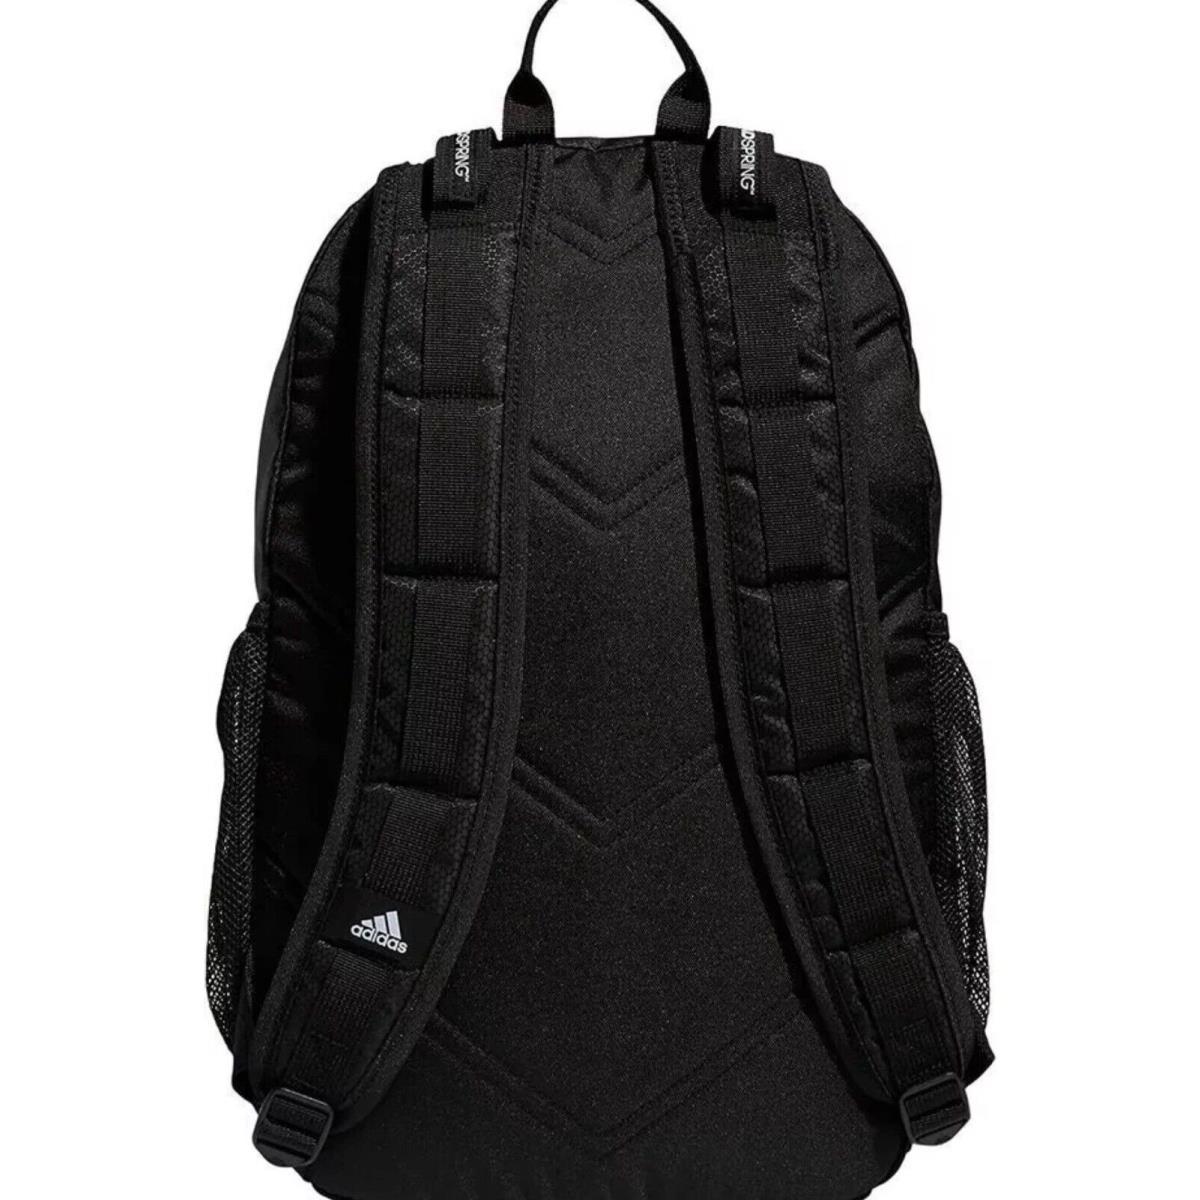 Adidas Unisex-adult Excel Backpack Black/white 3 Stripe Webbing One Size